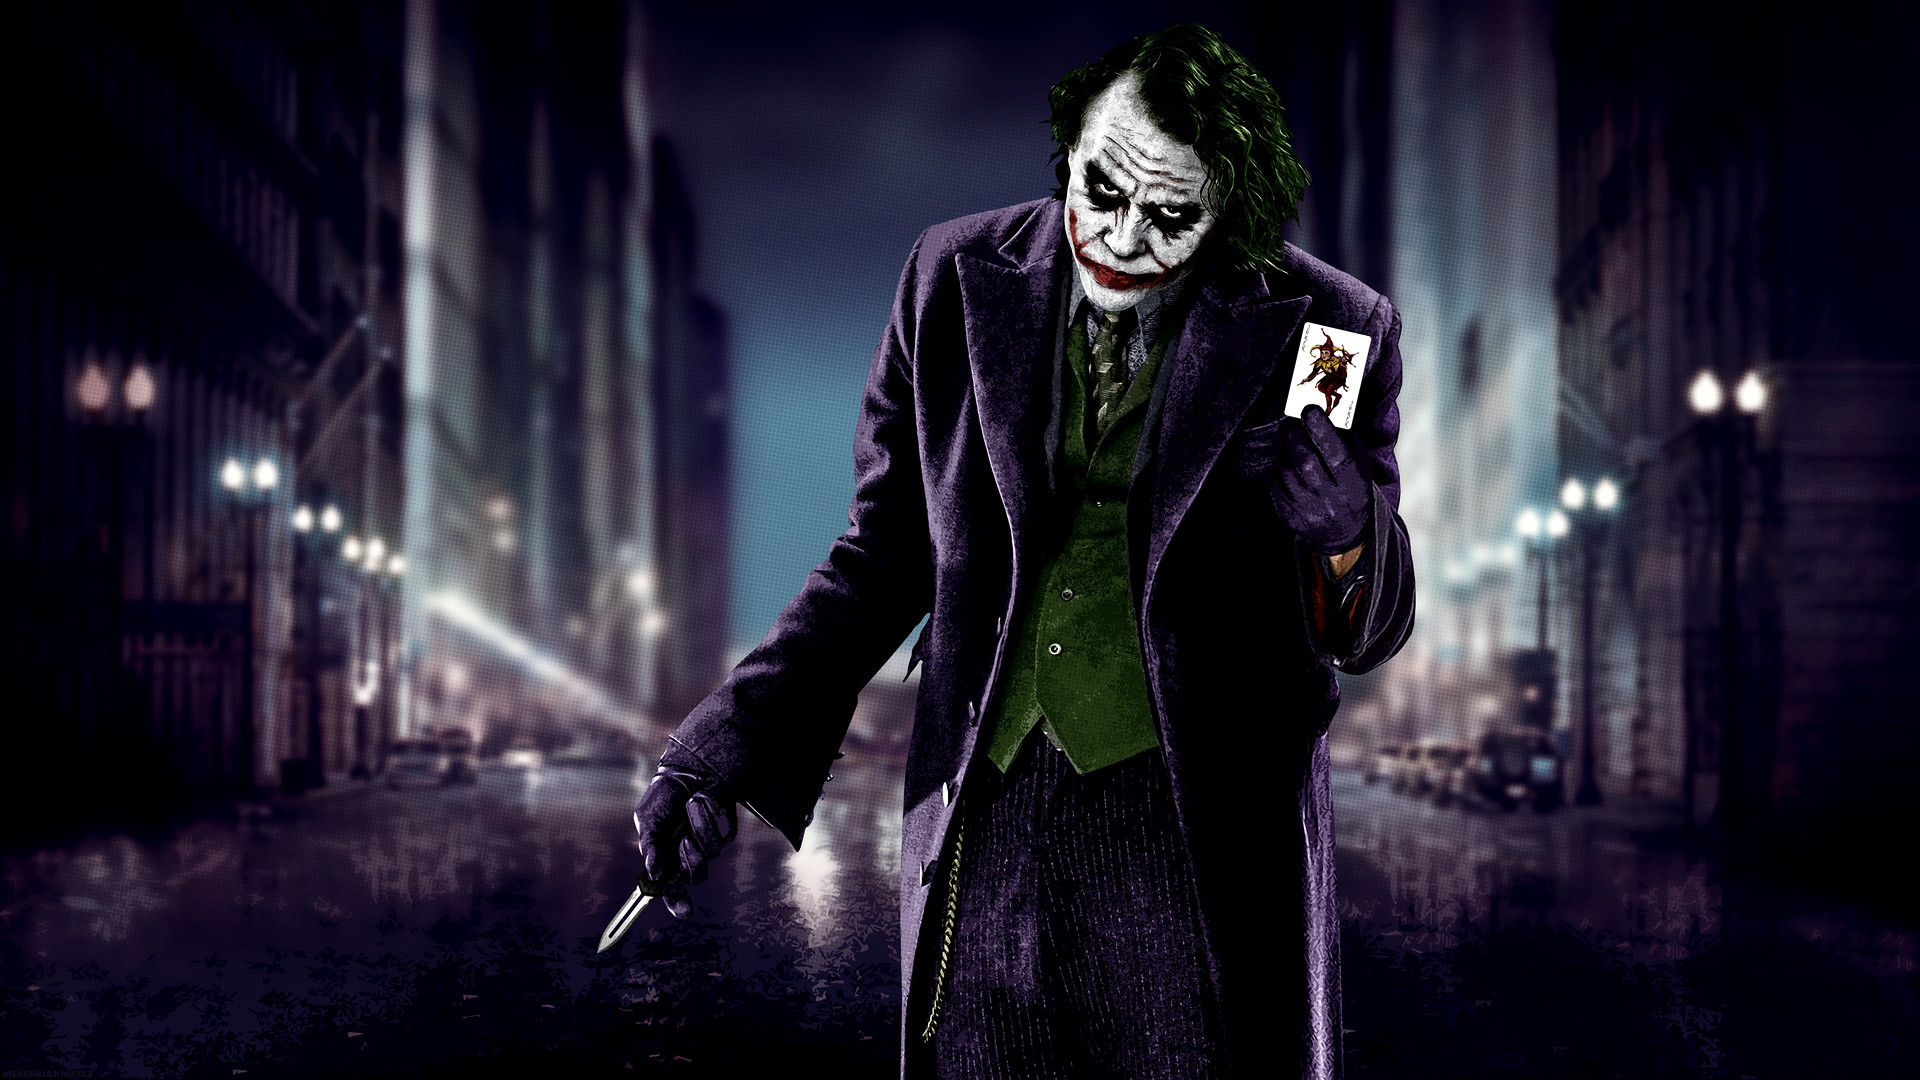 joker fondo de pantalla hd,bufón,personaje de ficción,supervillano,oscuridad,hombre murciélago